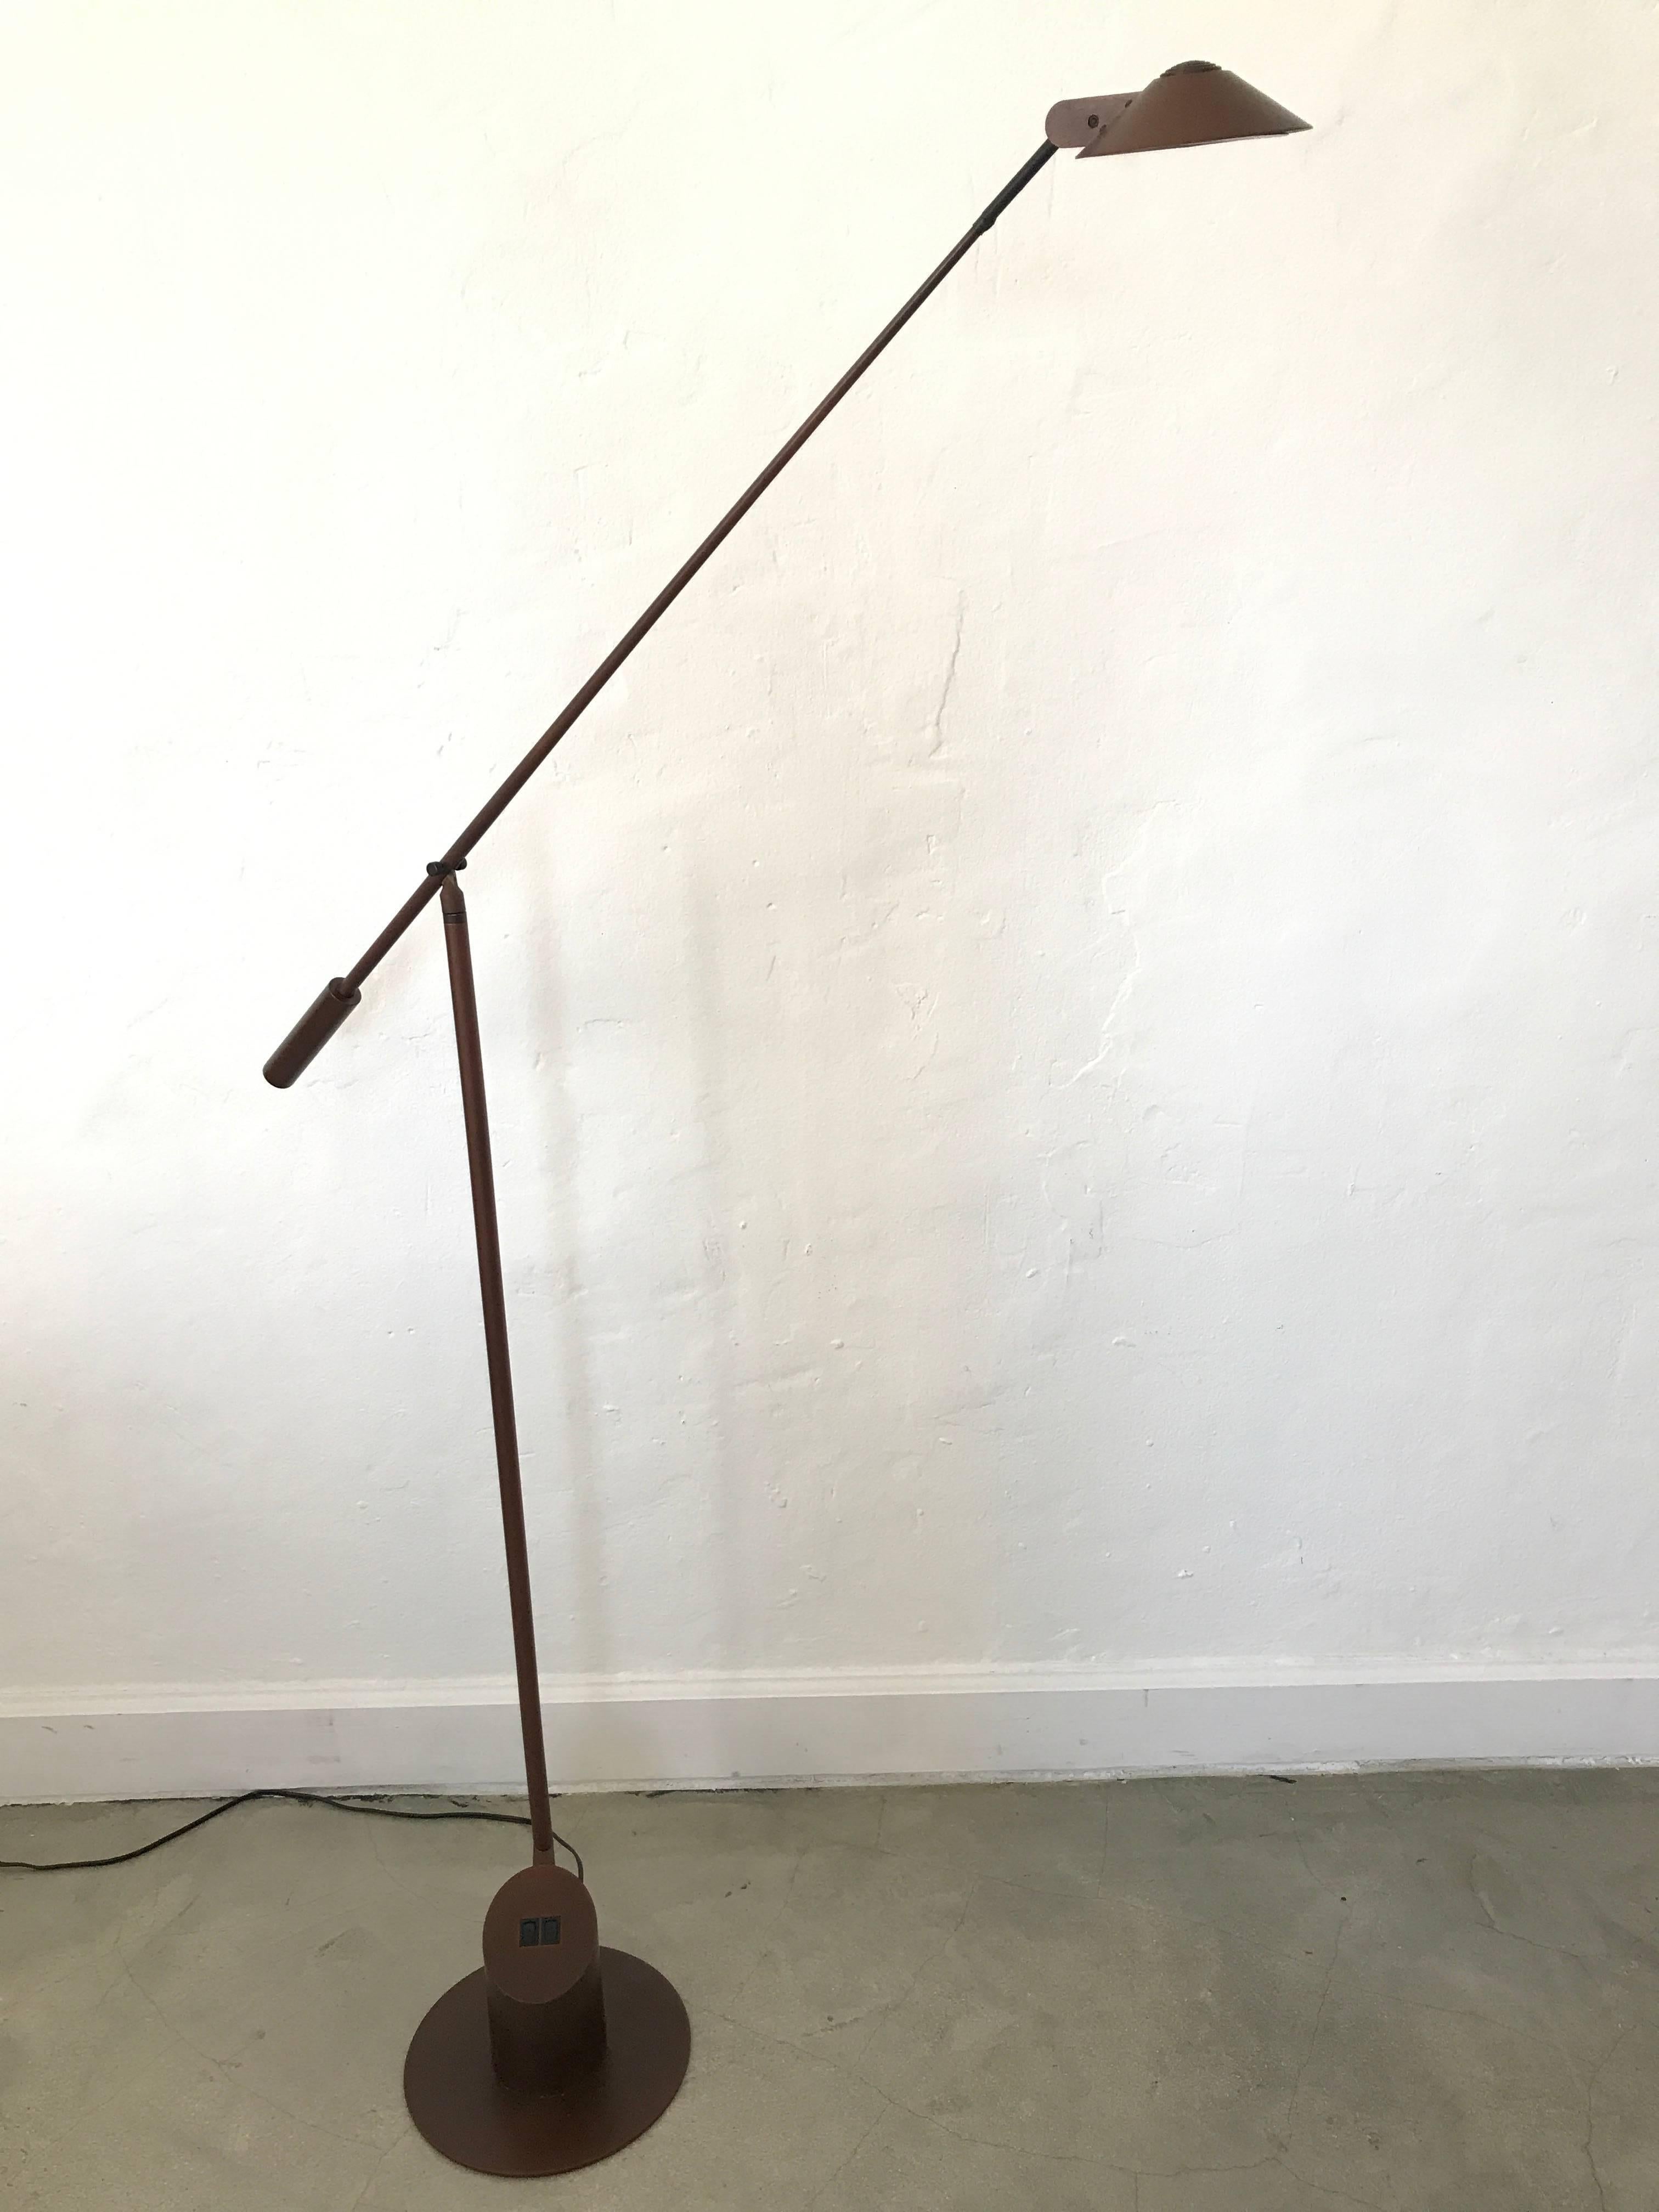 Adjustable matte brown floor lamp with multiple lamp settings by Robert Sonneman for George Kovacs, 1989.